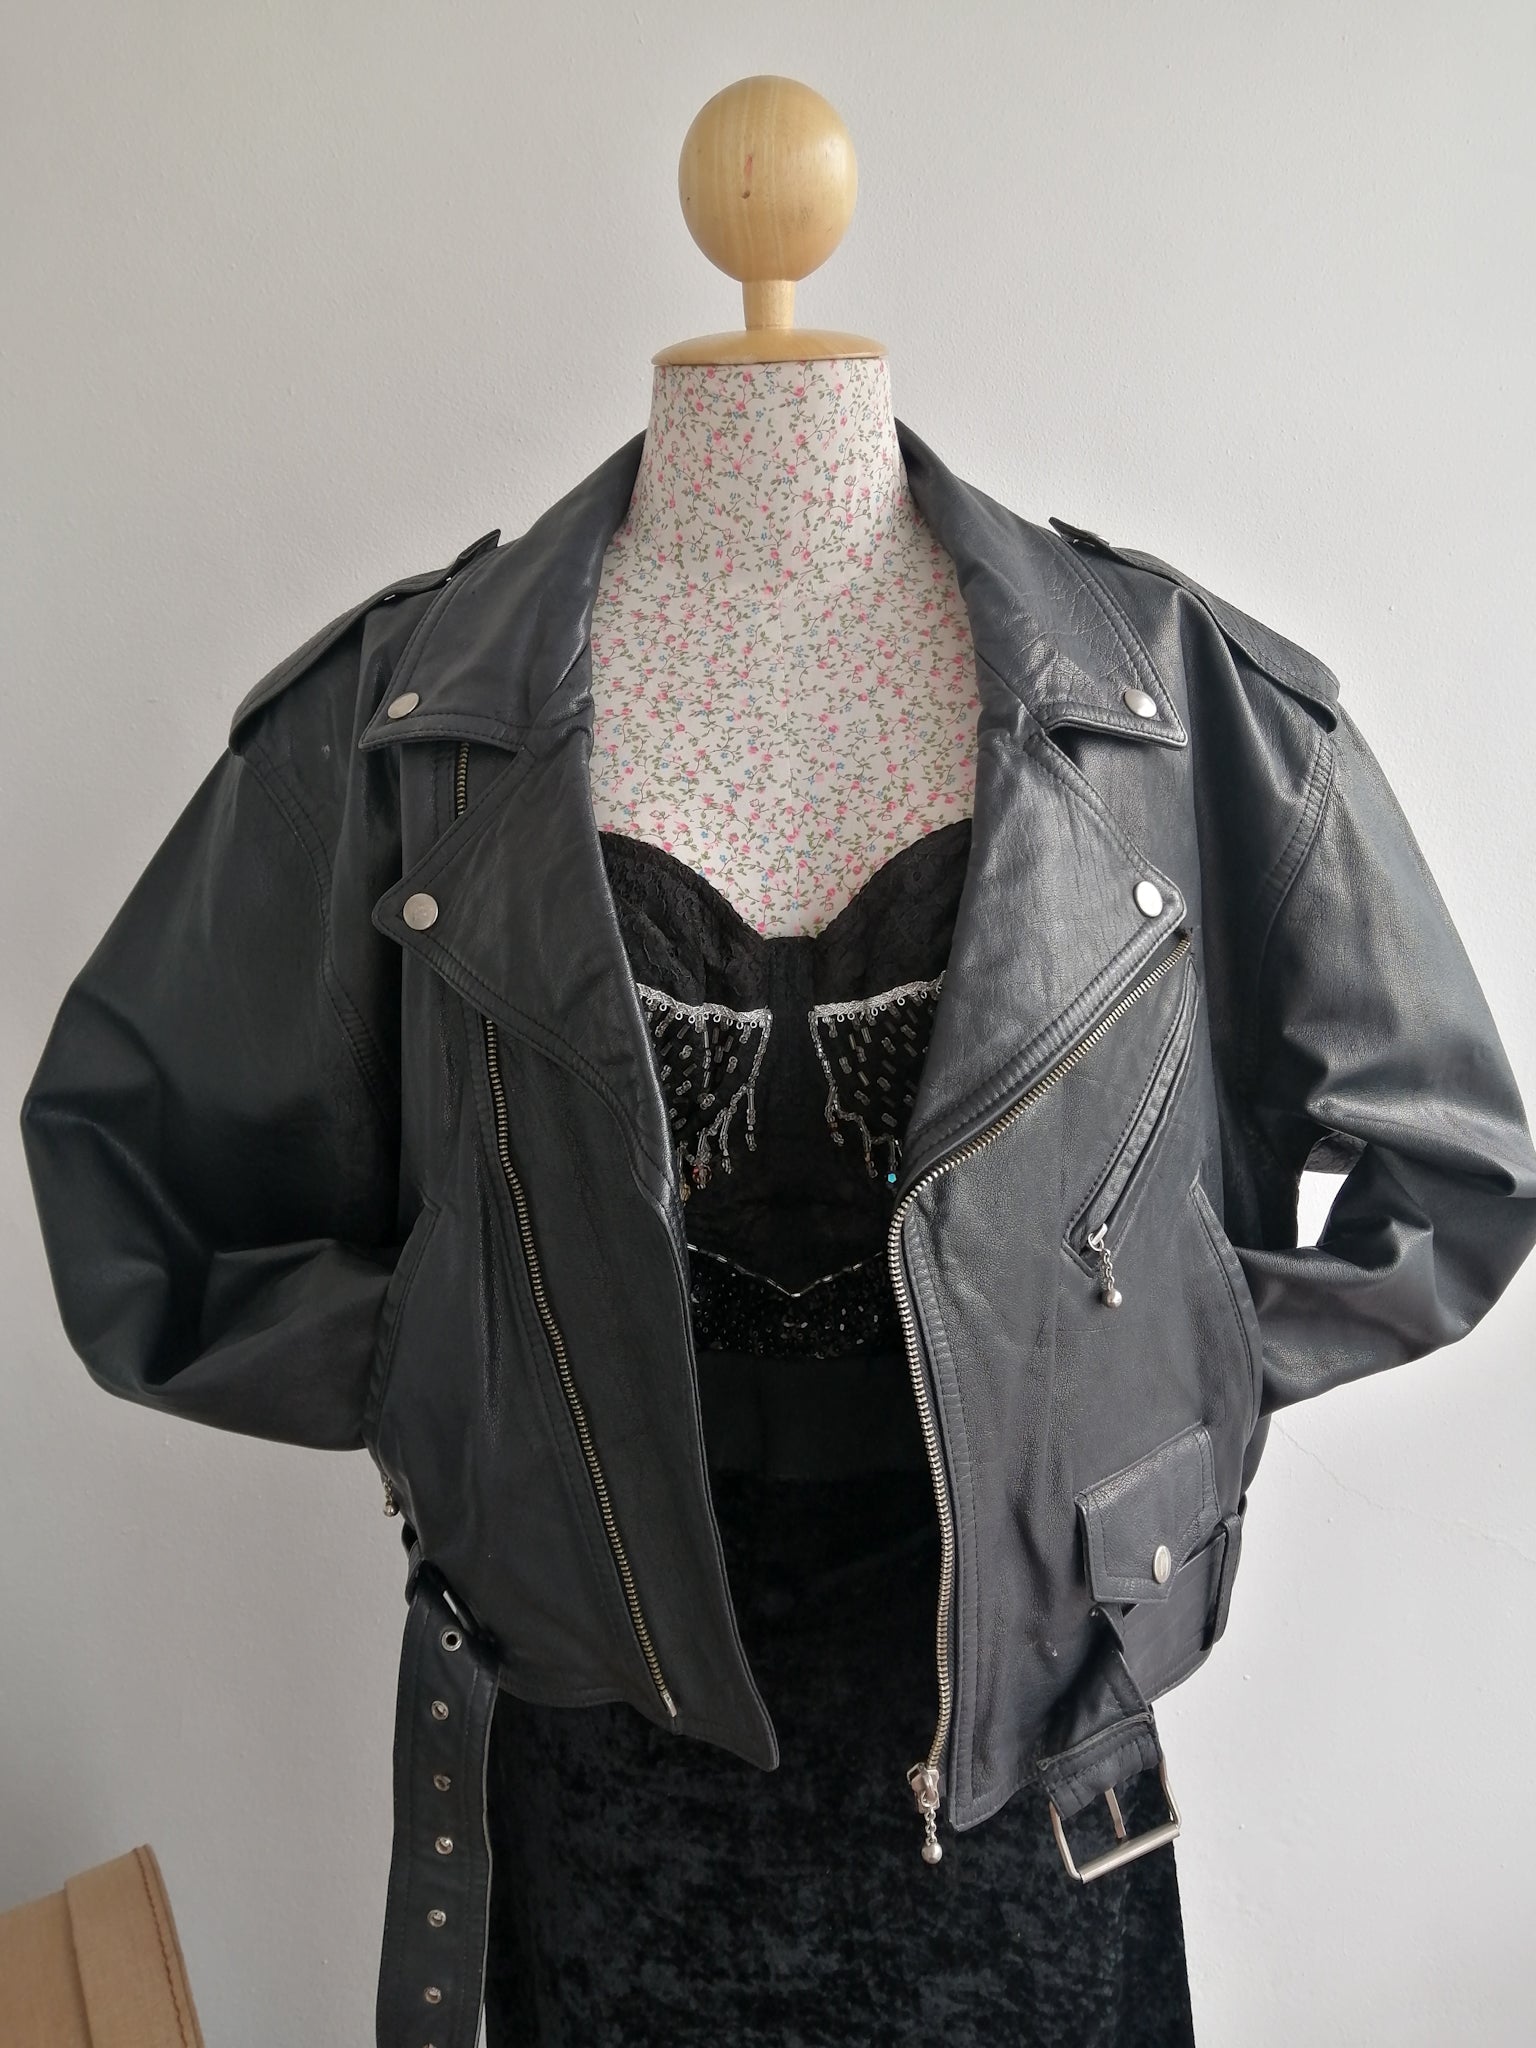 Authentic black leather biker jacket